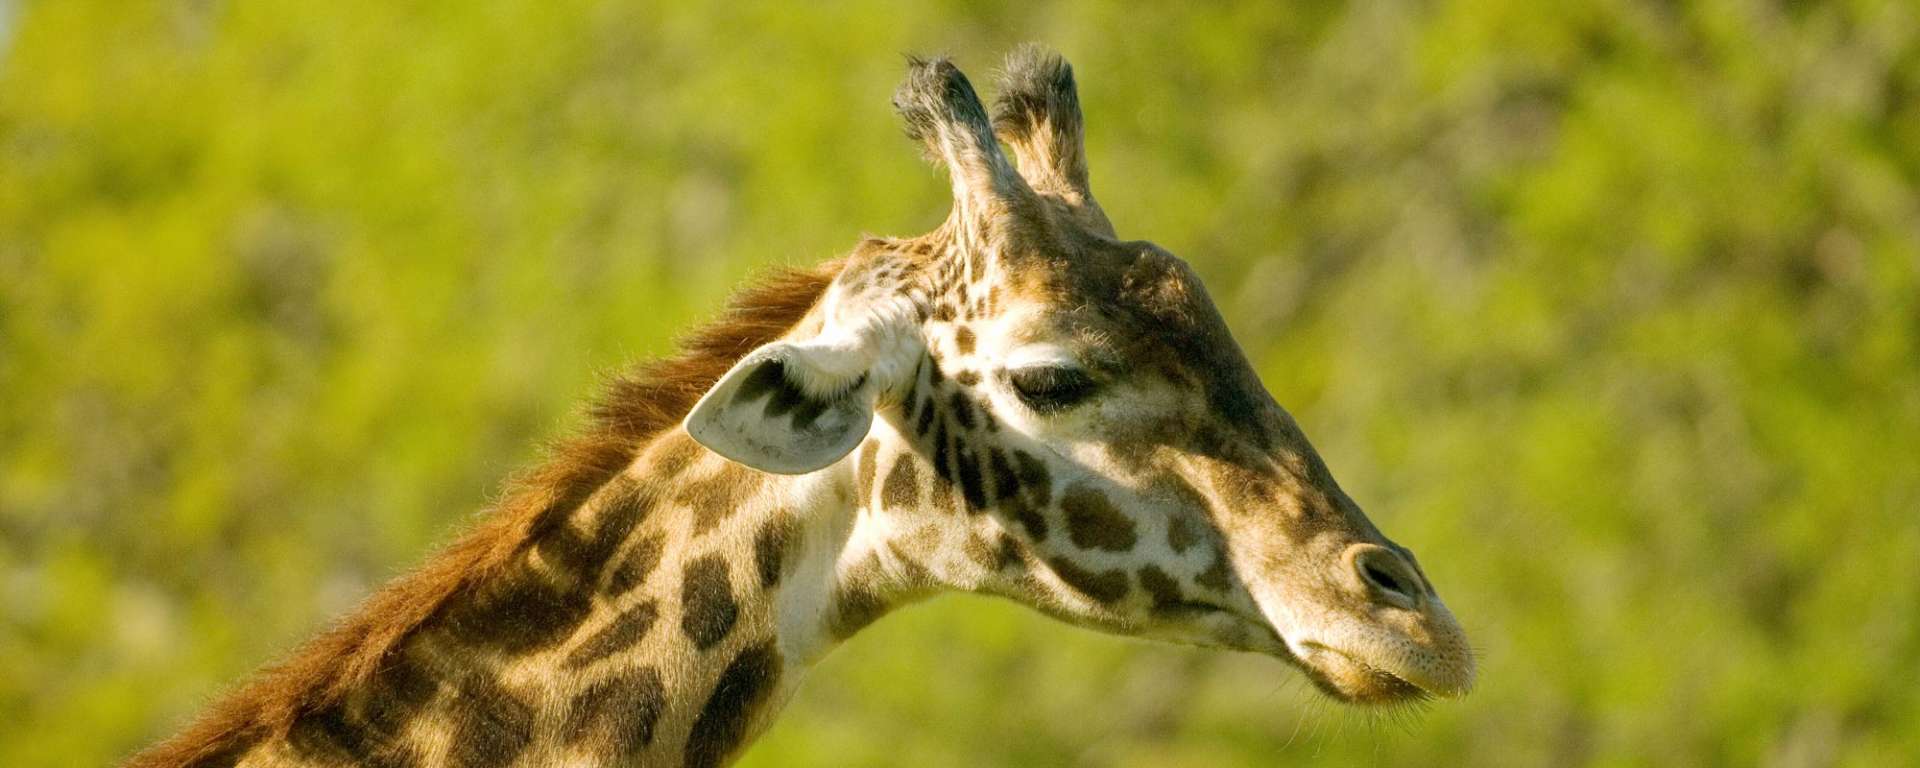 what are giraffe horns called